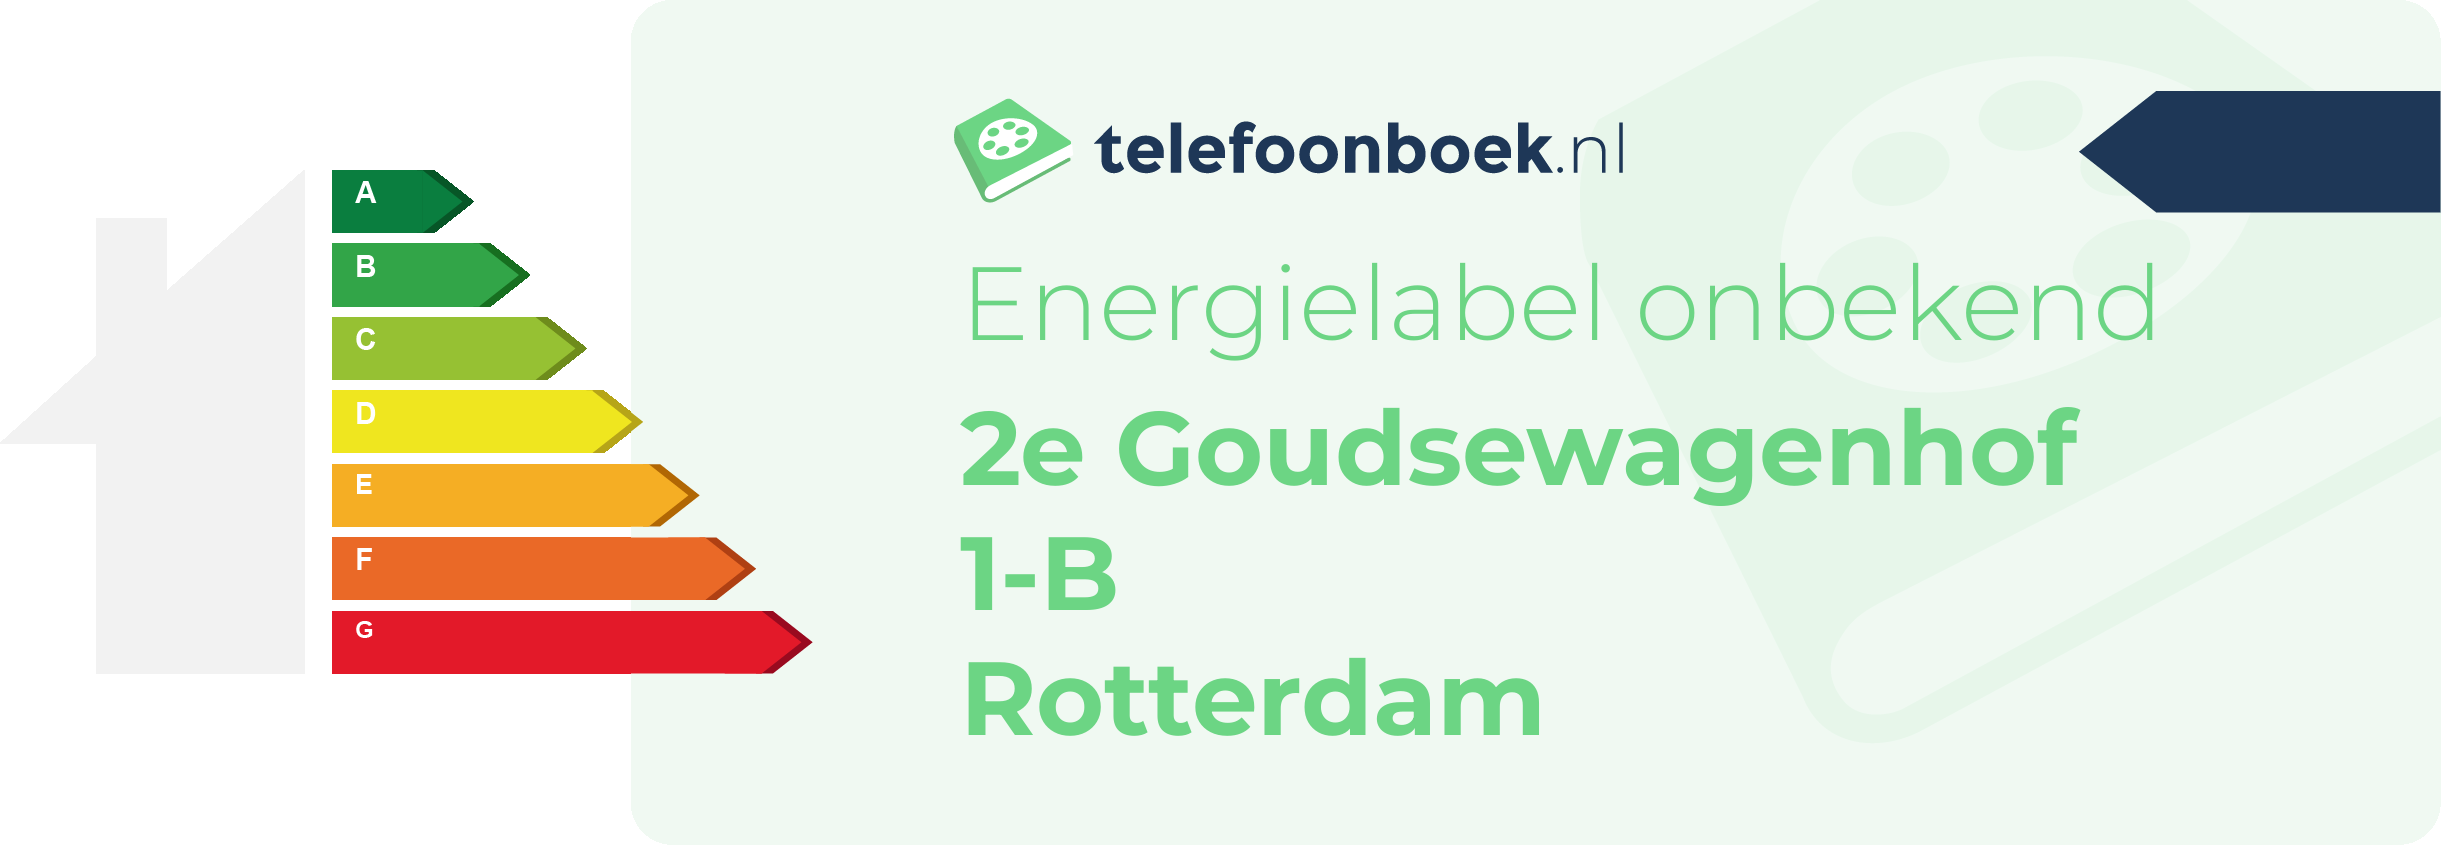 Energielabel 2e Goudsewagenhof 1-B Rotterdam